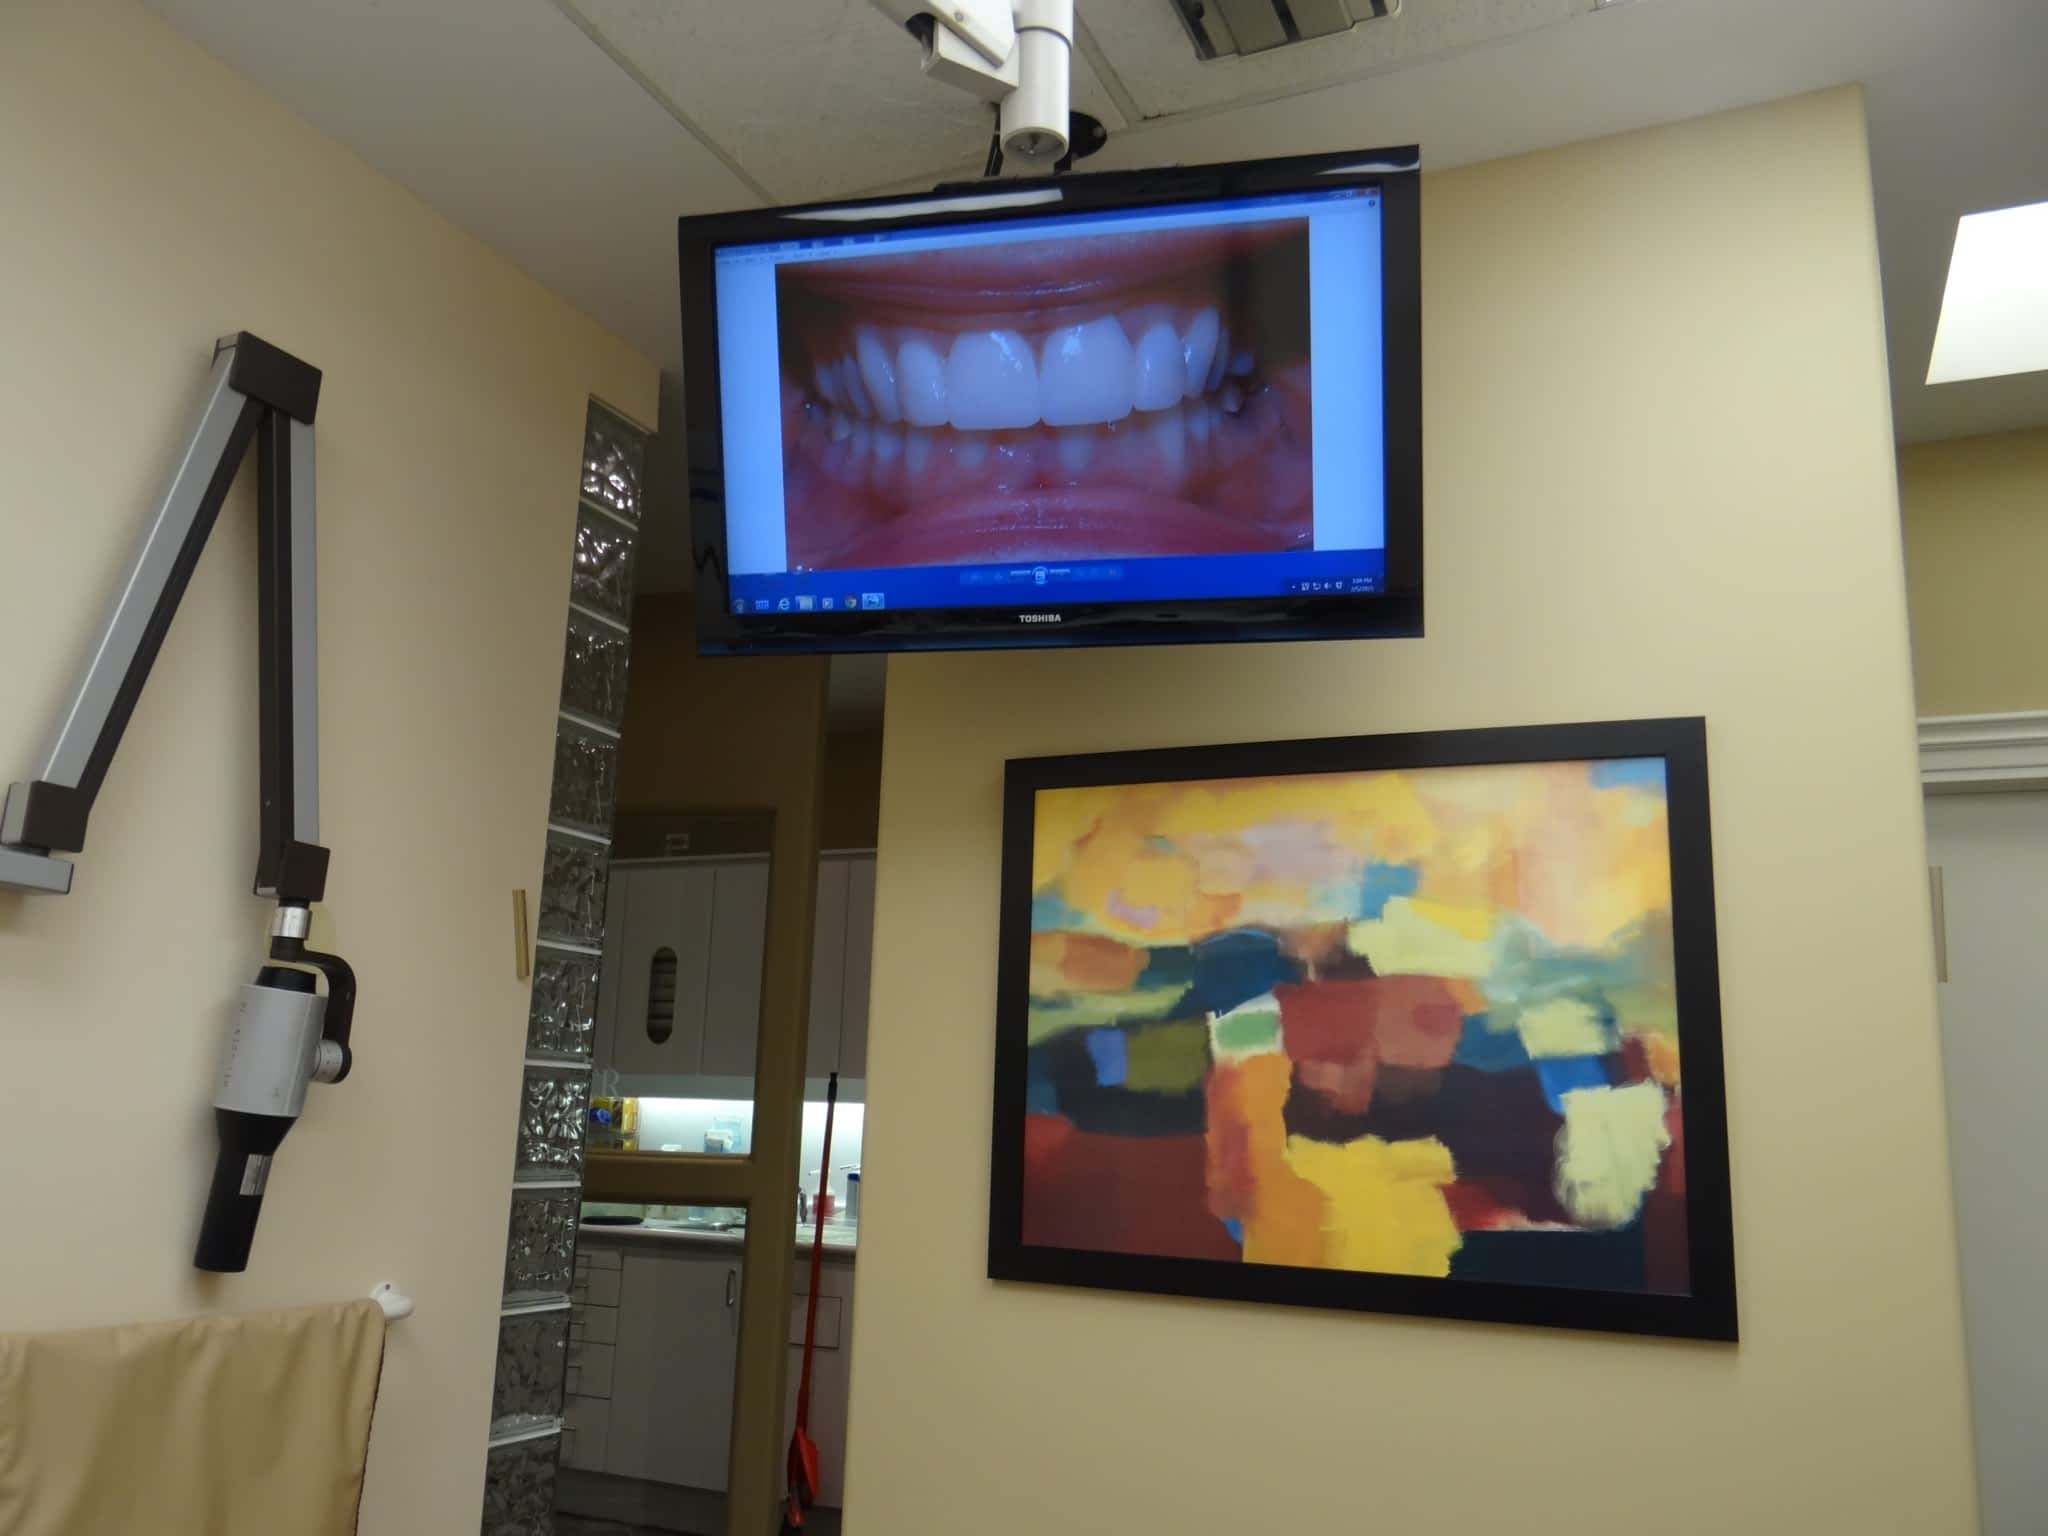 photo Appleday Dental Care